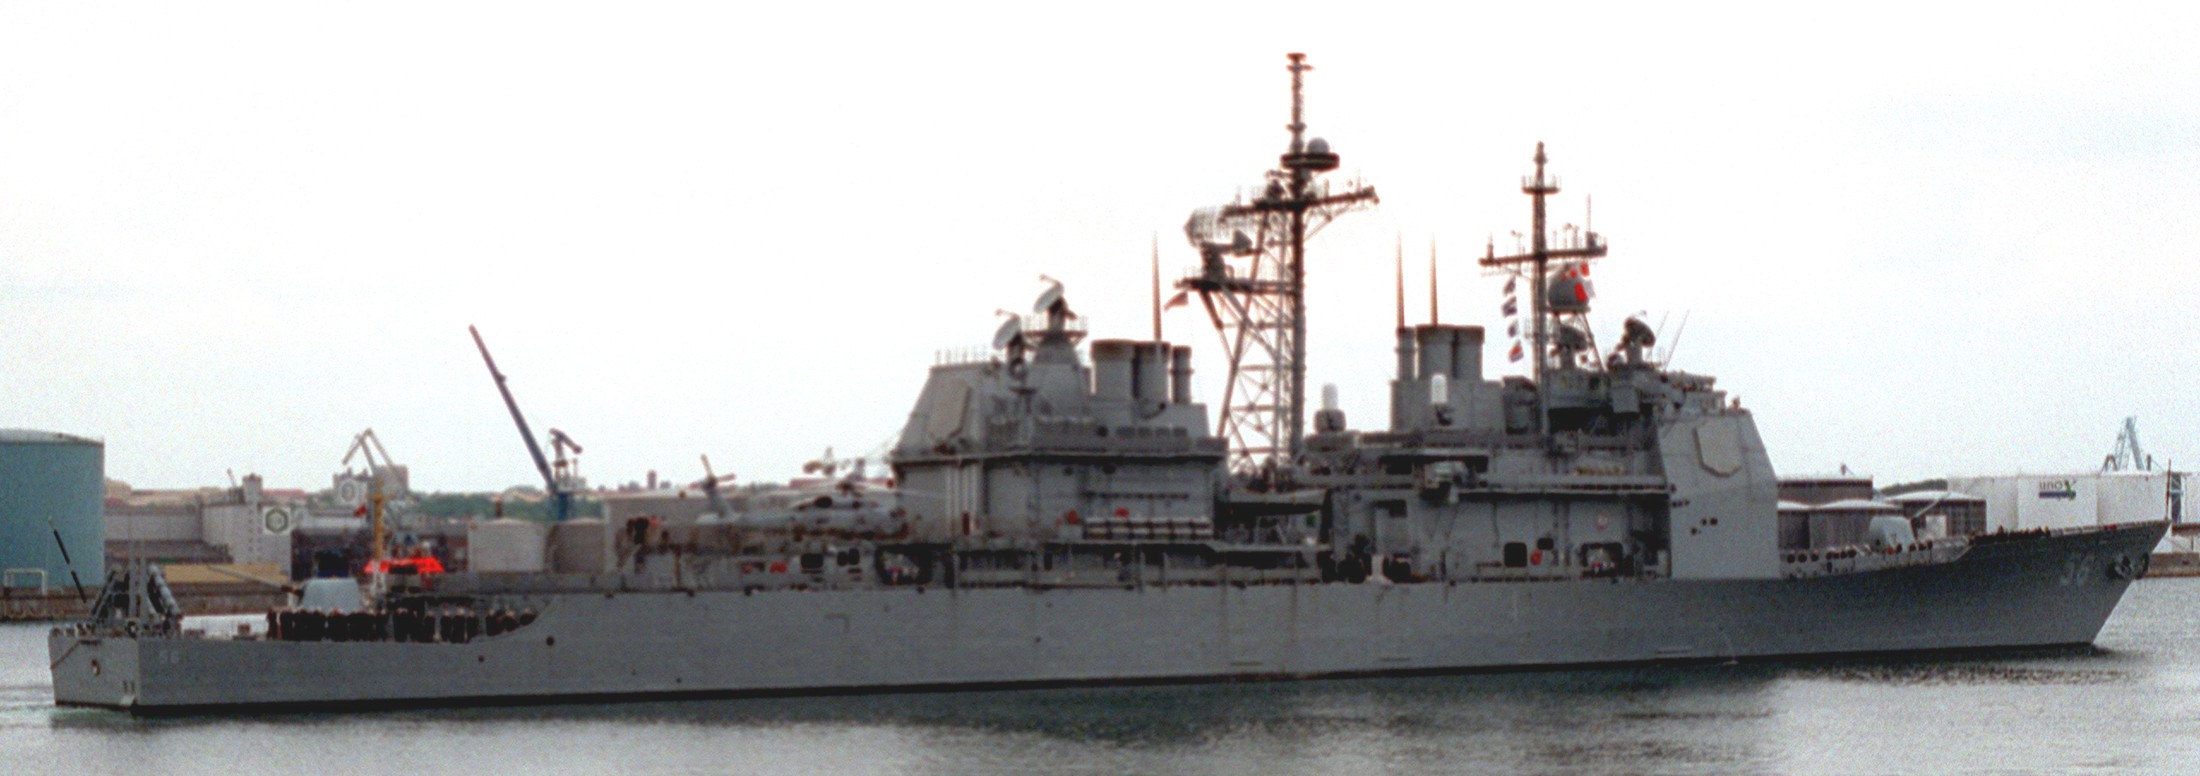 cg-56 uss san jacinto ticonderoga class guided missile cruiser aegis us navy aarhus denmark 157